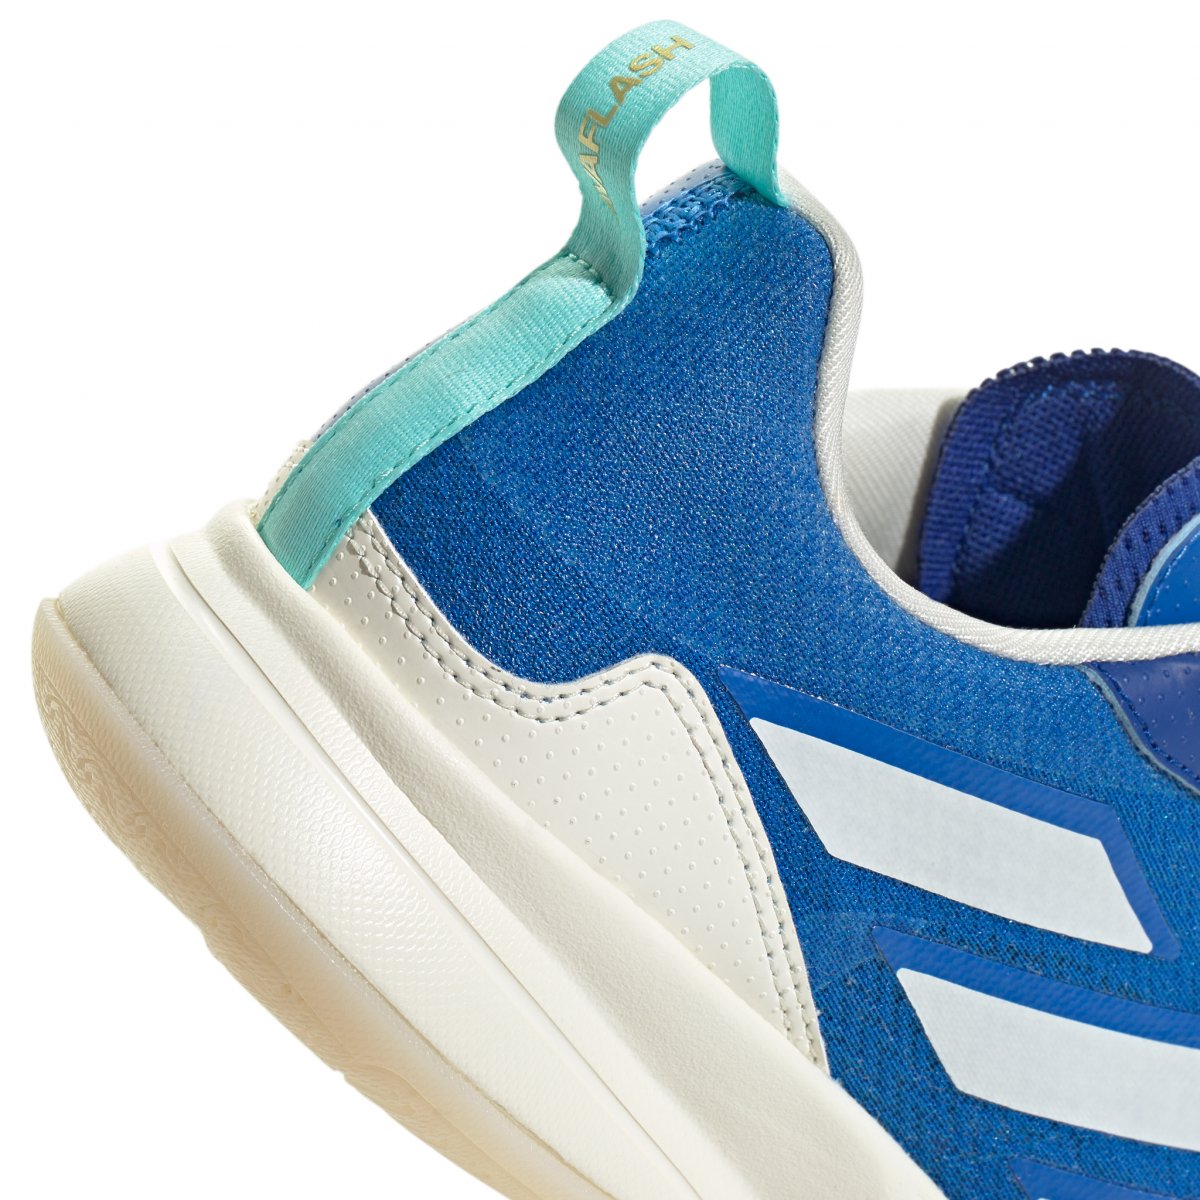 Tenis Adidas Avaflash Dama (Azul/blanco)